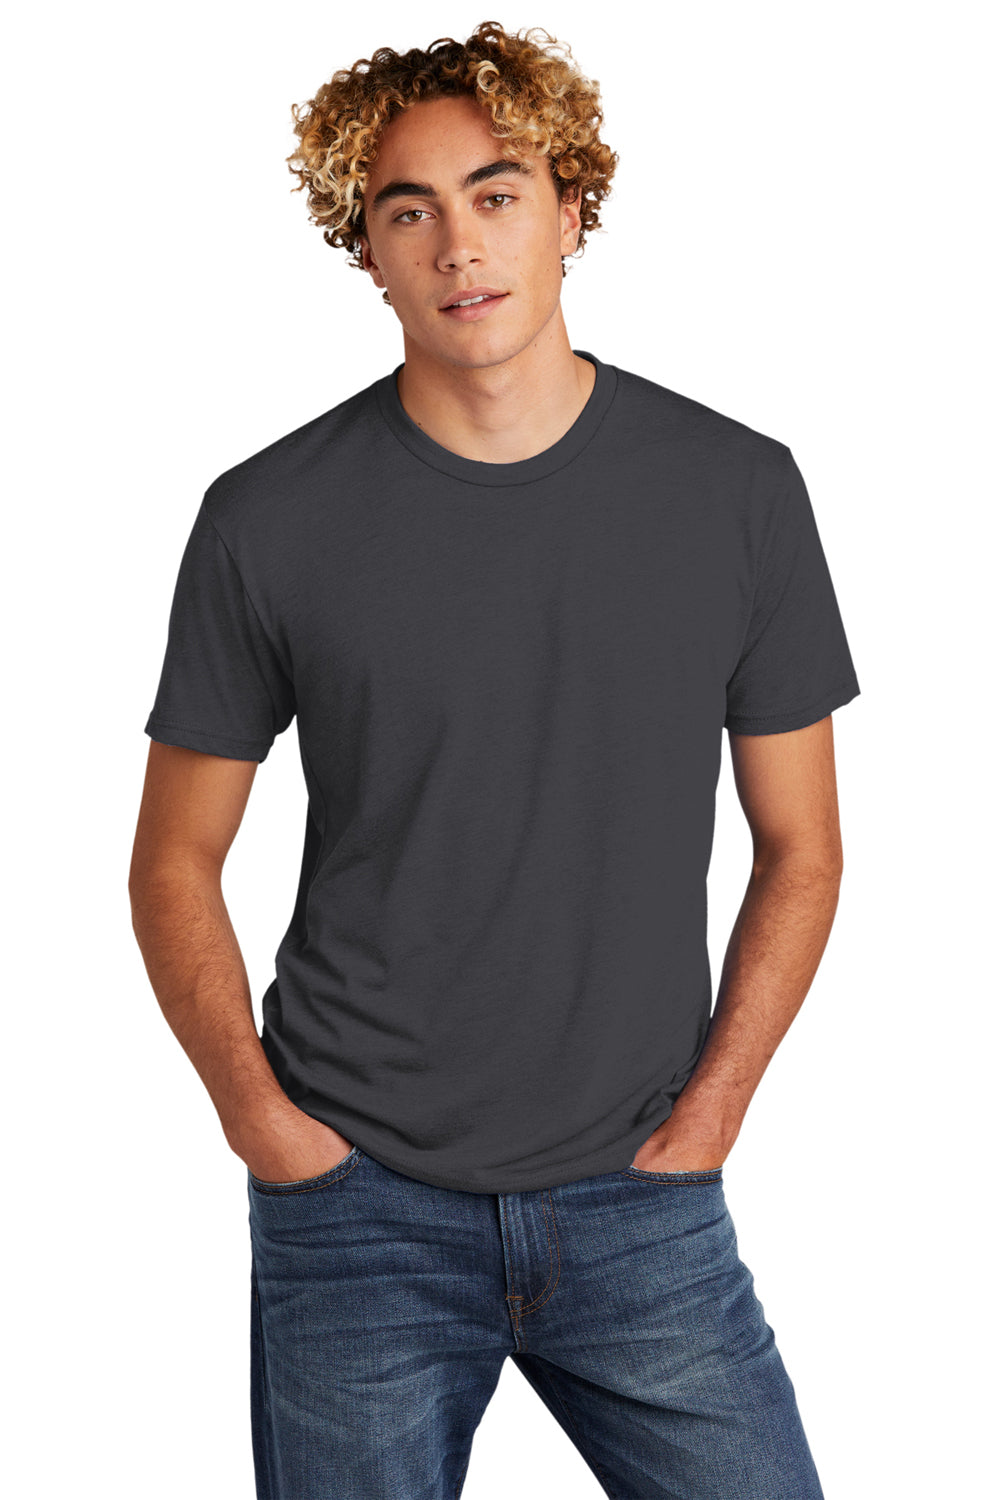 Next Level NL6010/6010 Mens Jersey Short Sleeve Crewneck T-Shirt Graphite Grey Front